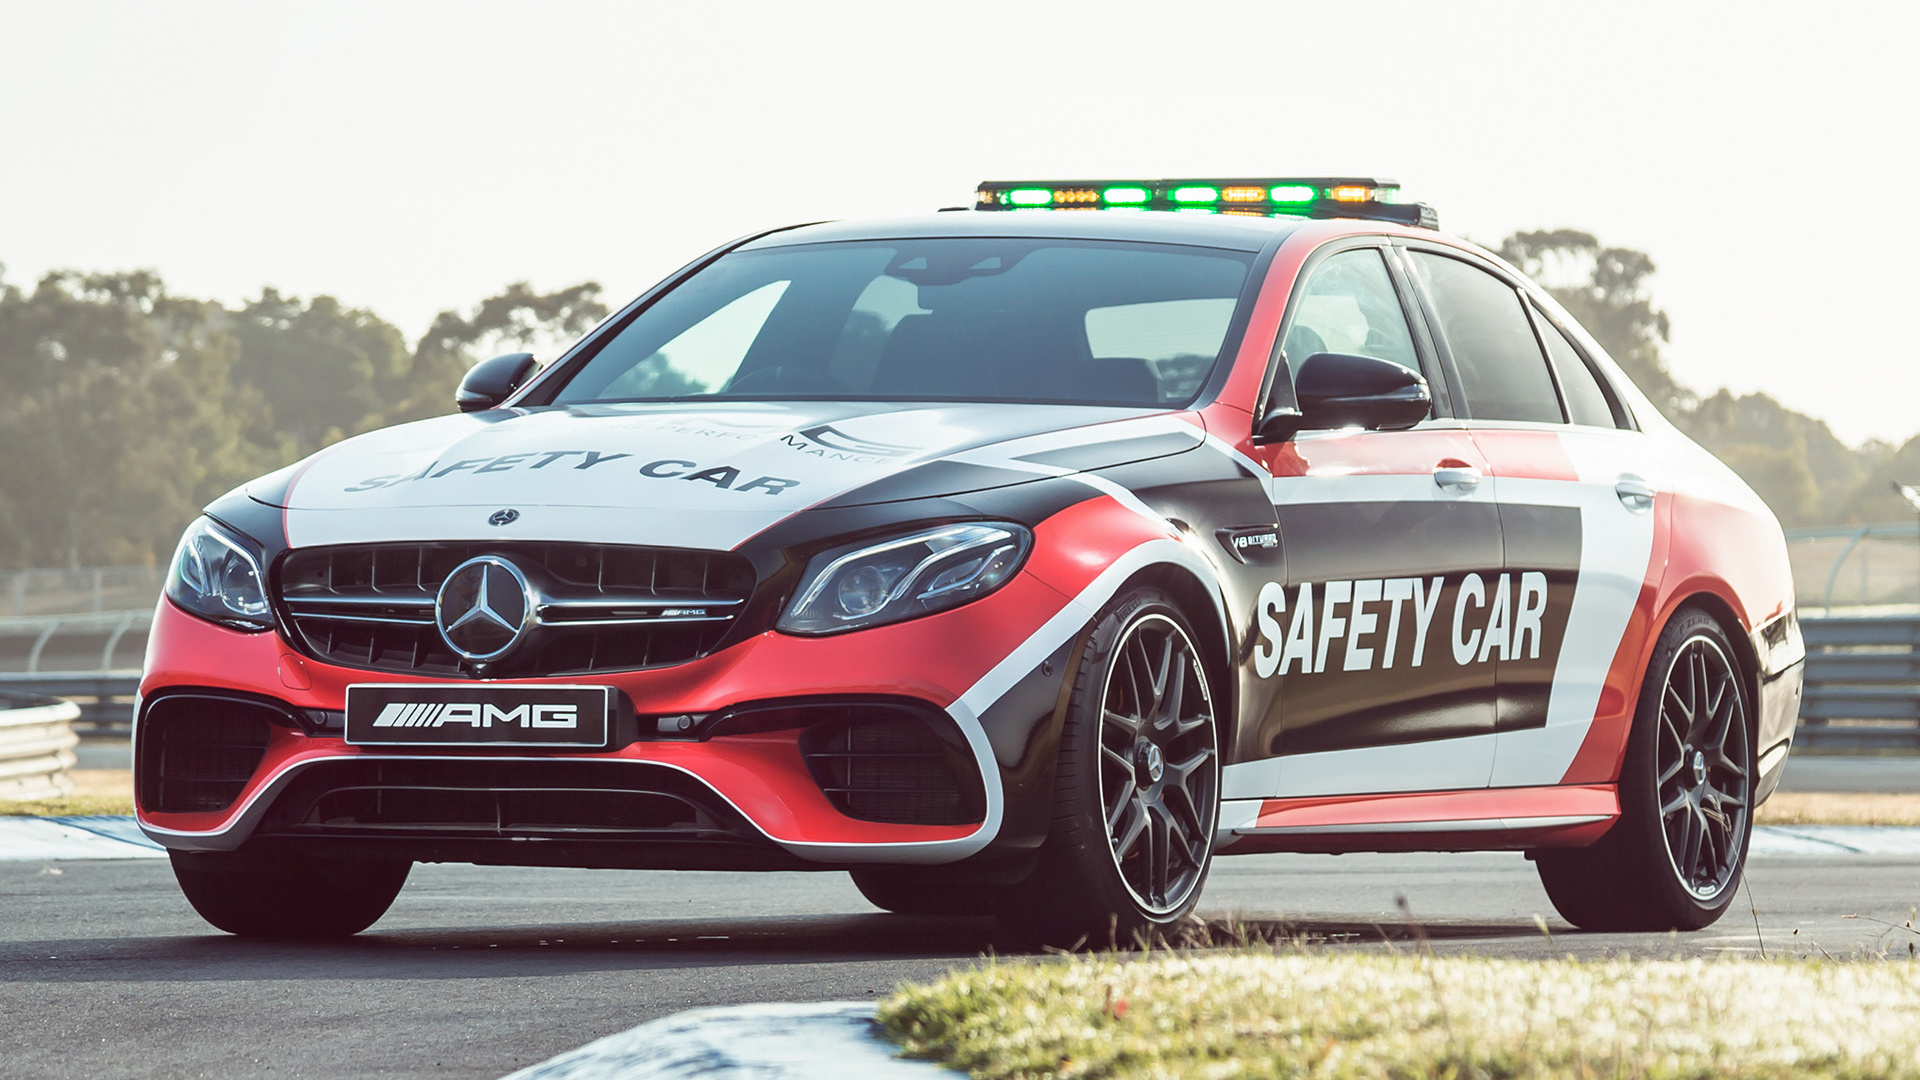 Los mejores fondos de pantalla de Mercedes Amg E 63 S Safety Car para la pantalla del teléfono